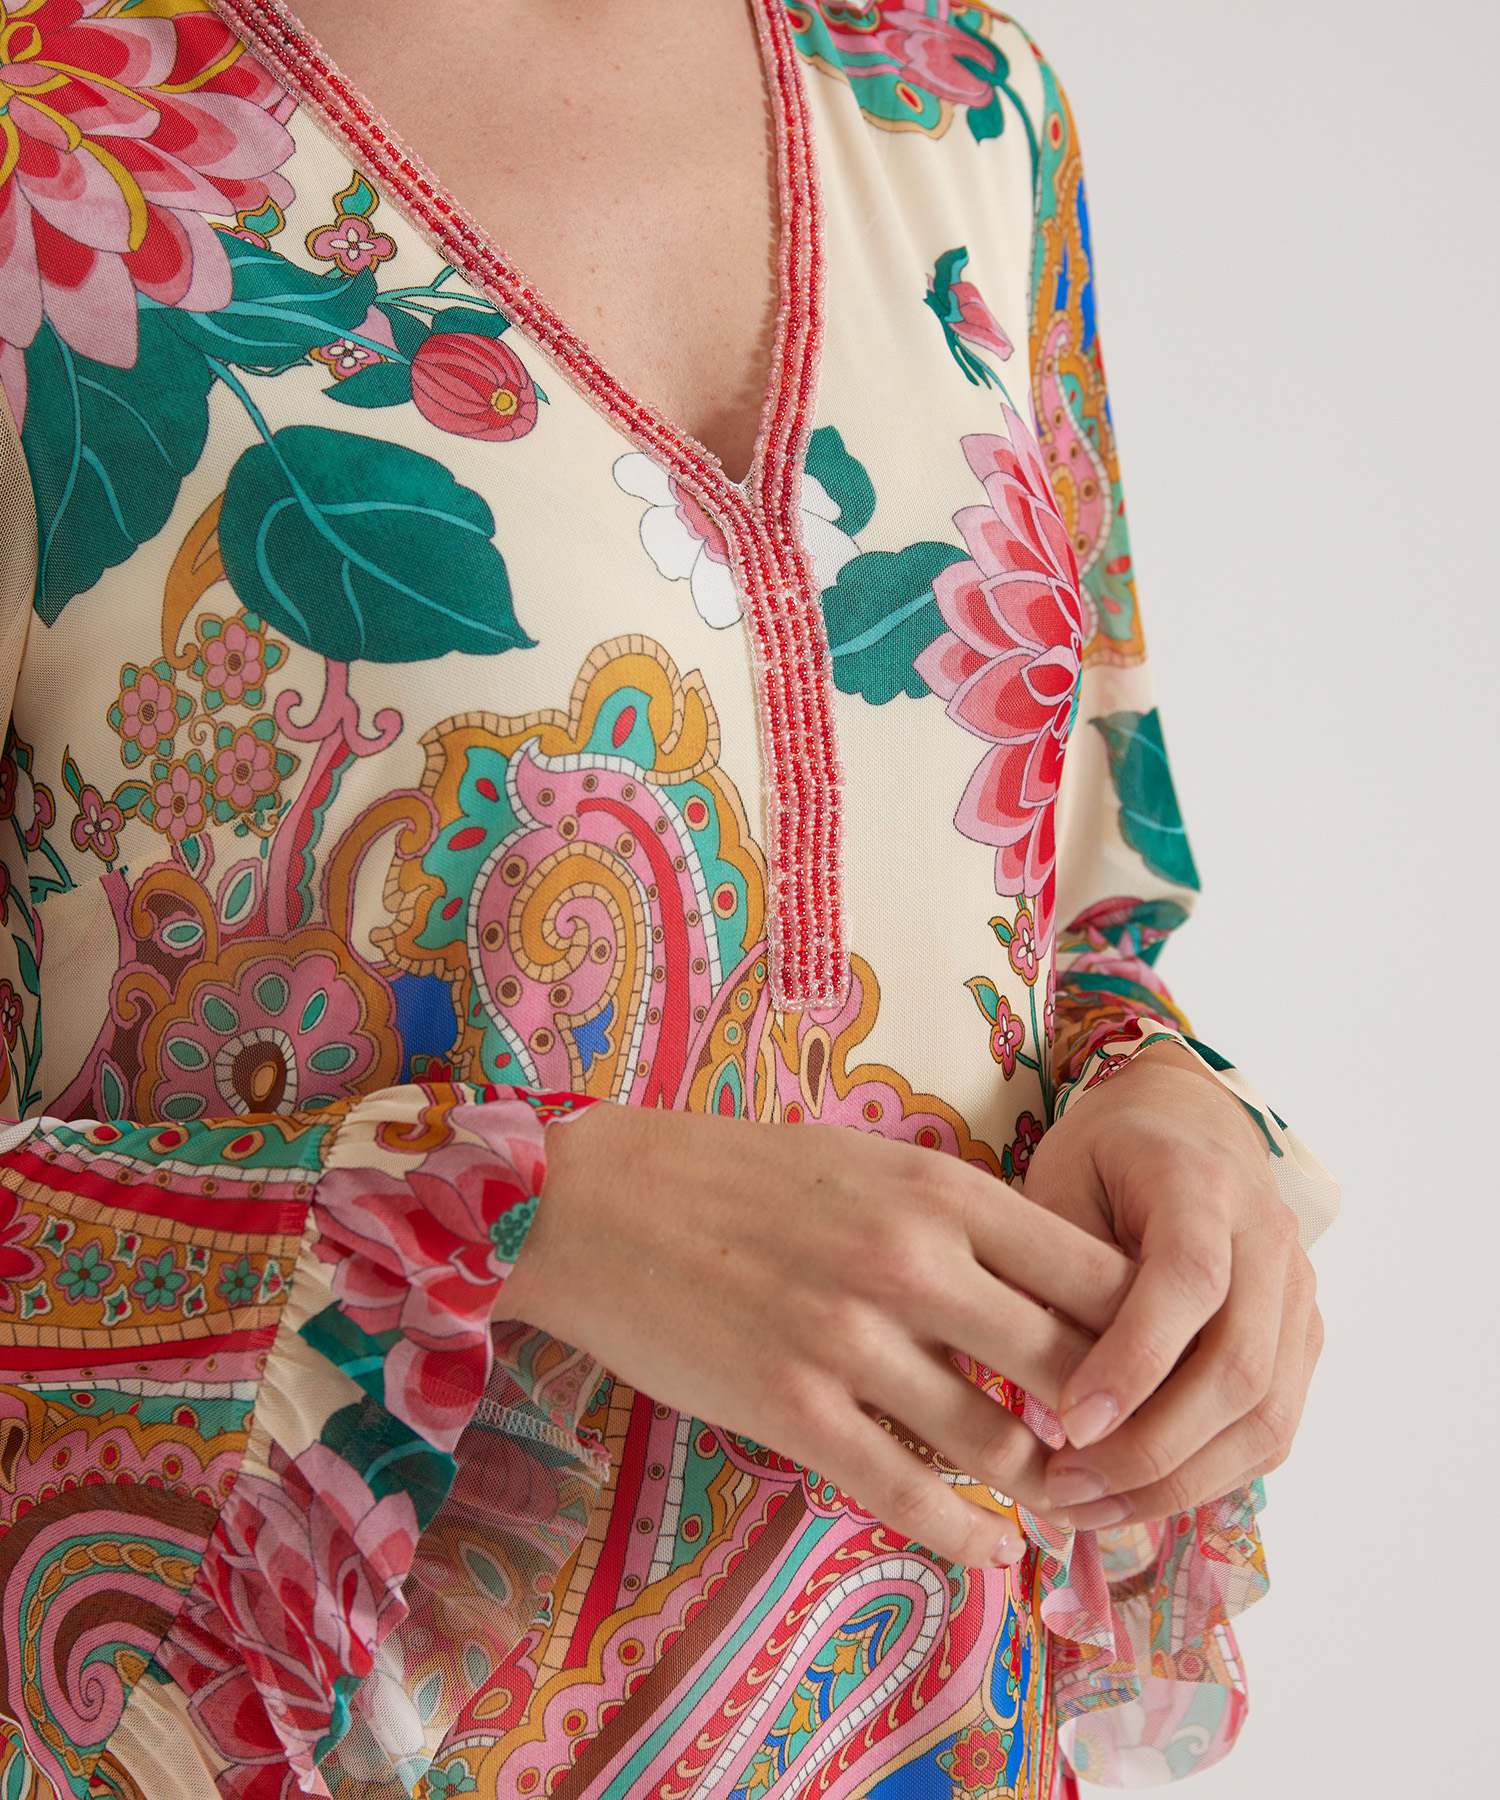 laag Haarvaten Omleiding Ana Alcazar mesh jurk paisley flower print | BeOne